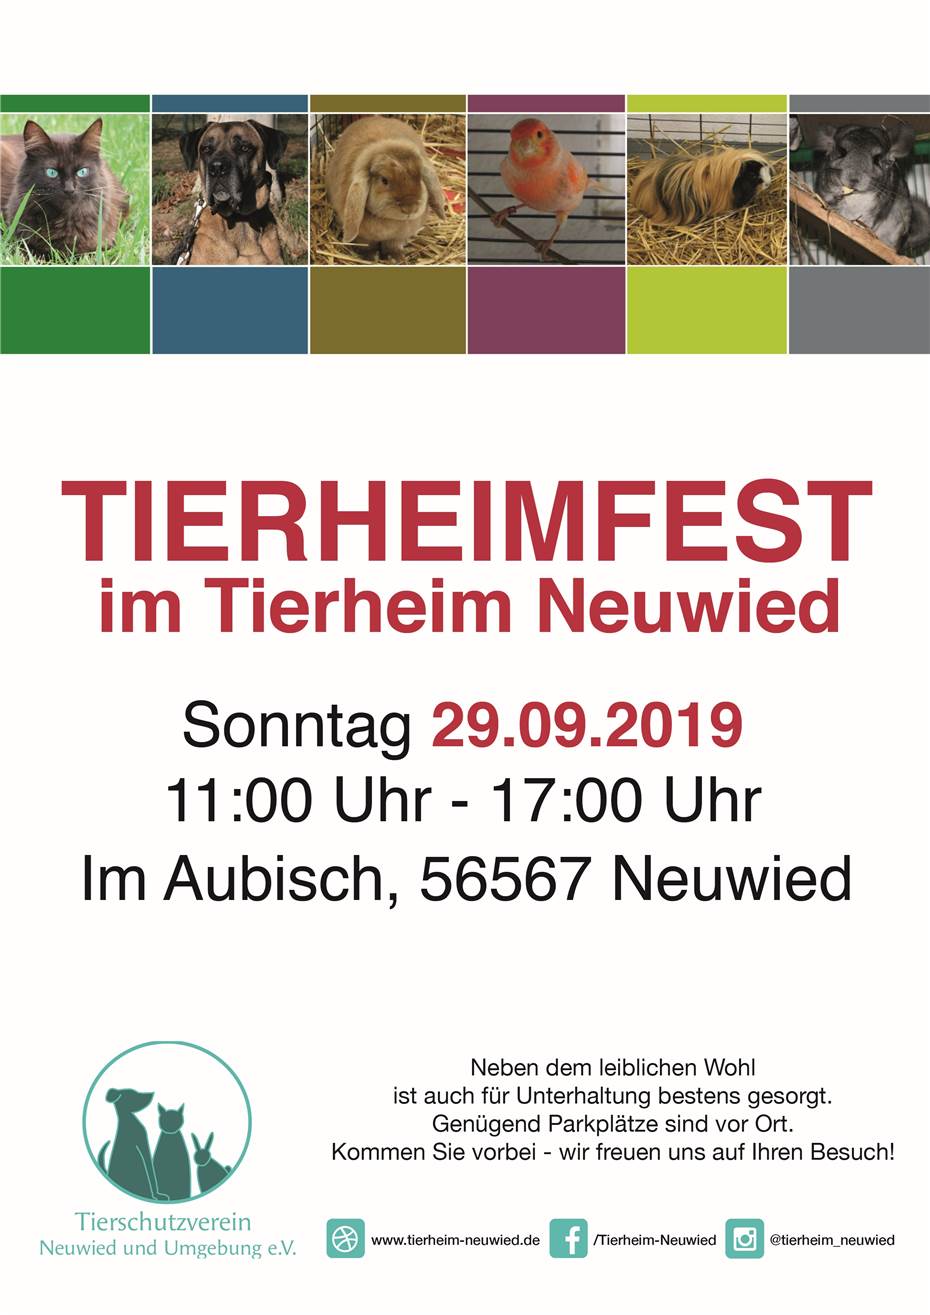 ns38-tierheimfest